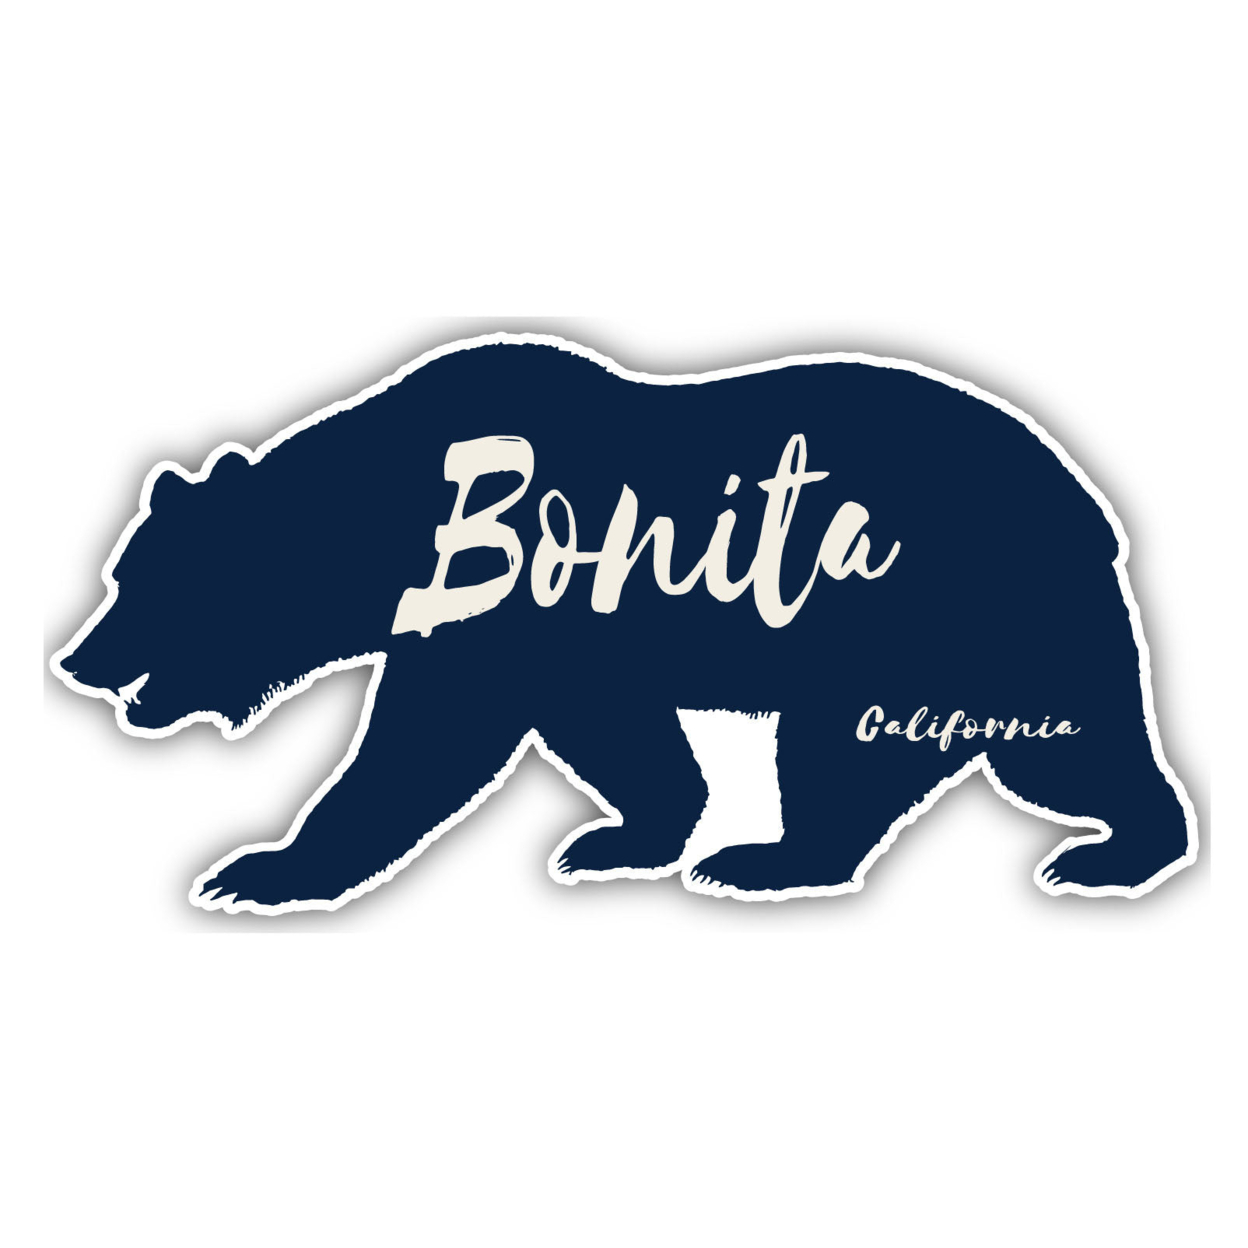 Bonita California Souvenir Decorative Stickers (Choose Theme And Size) - 4-Pack, 2-Inch, Bear